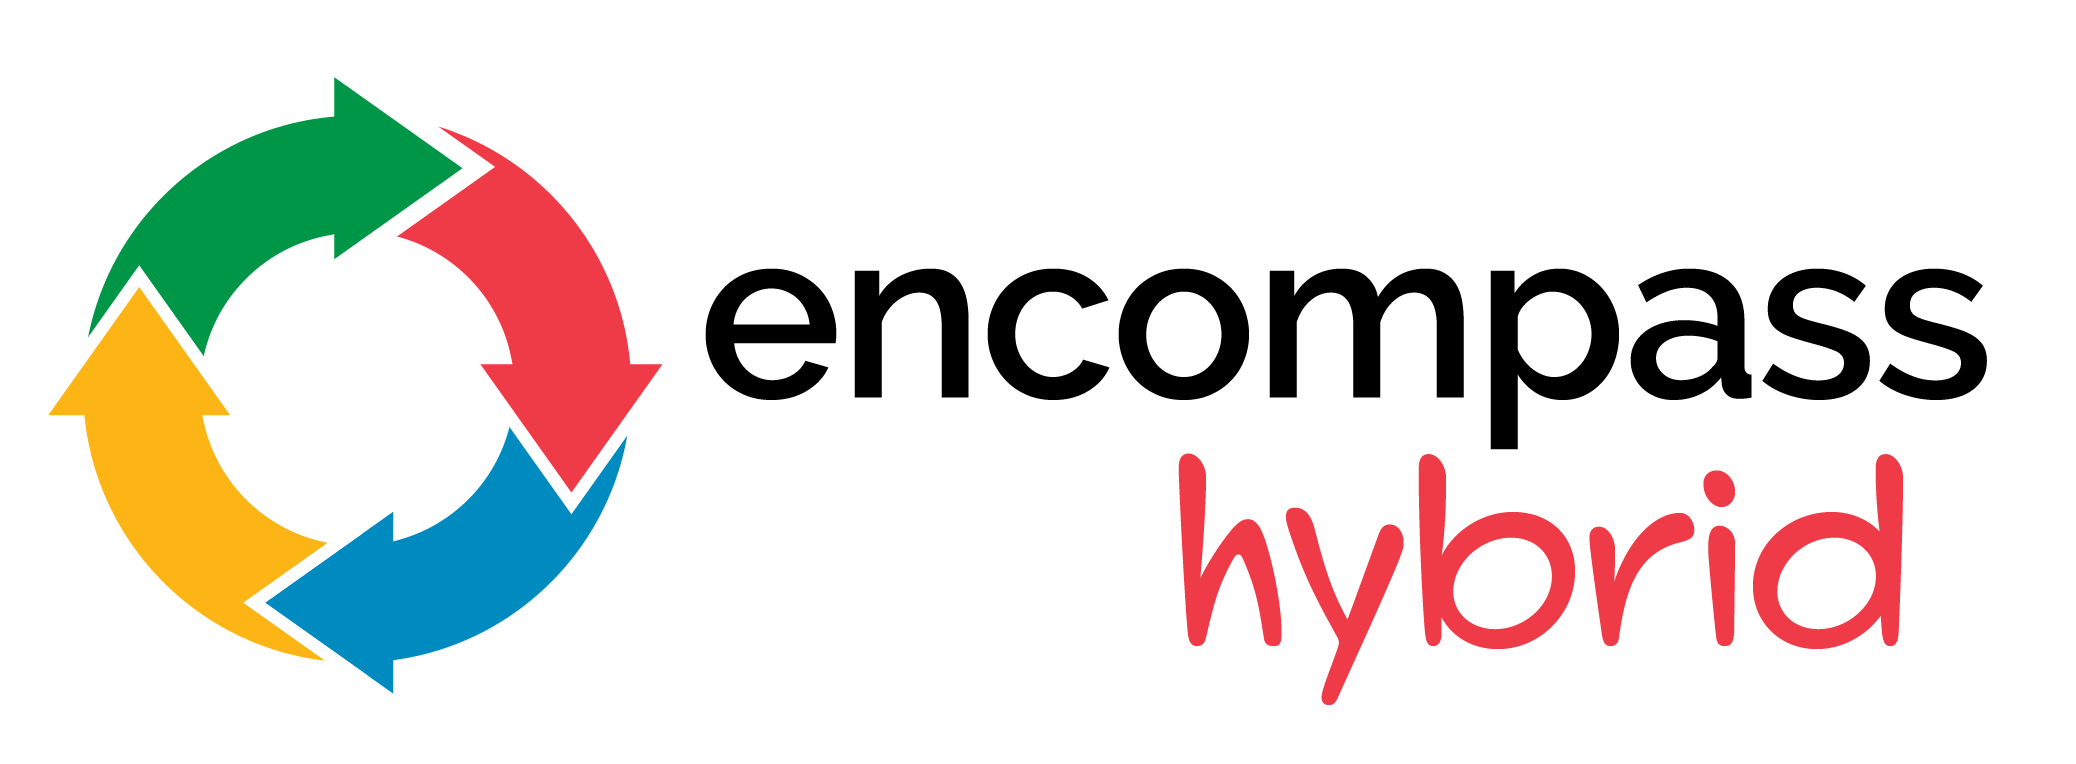 encompass-hybrid-main-logo.png